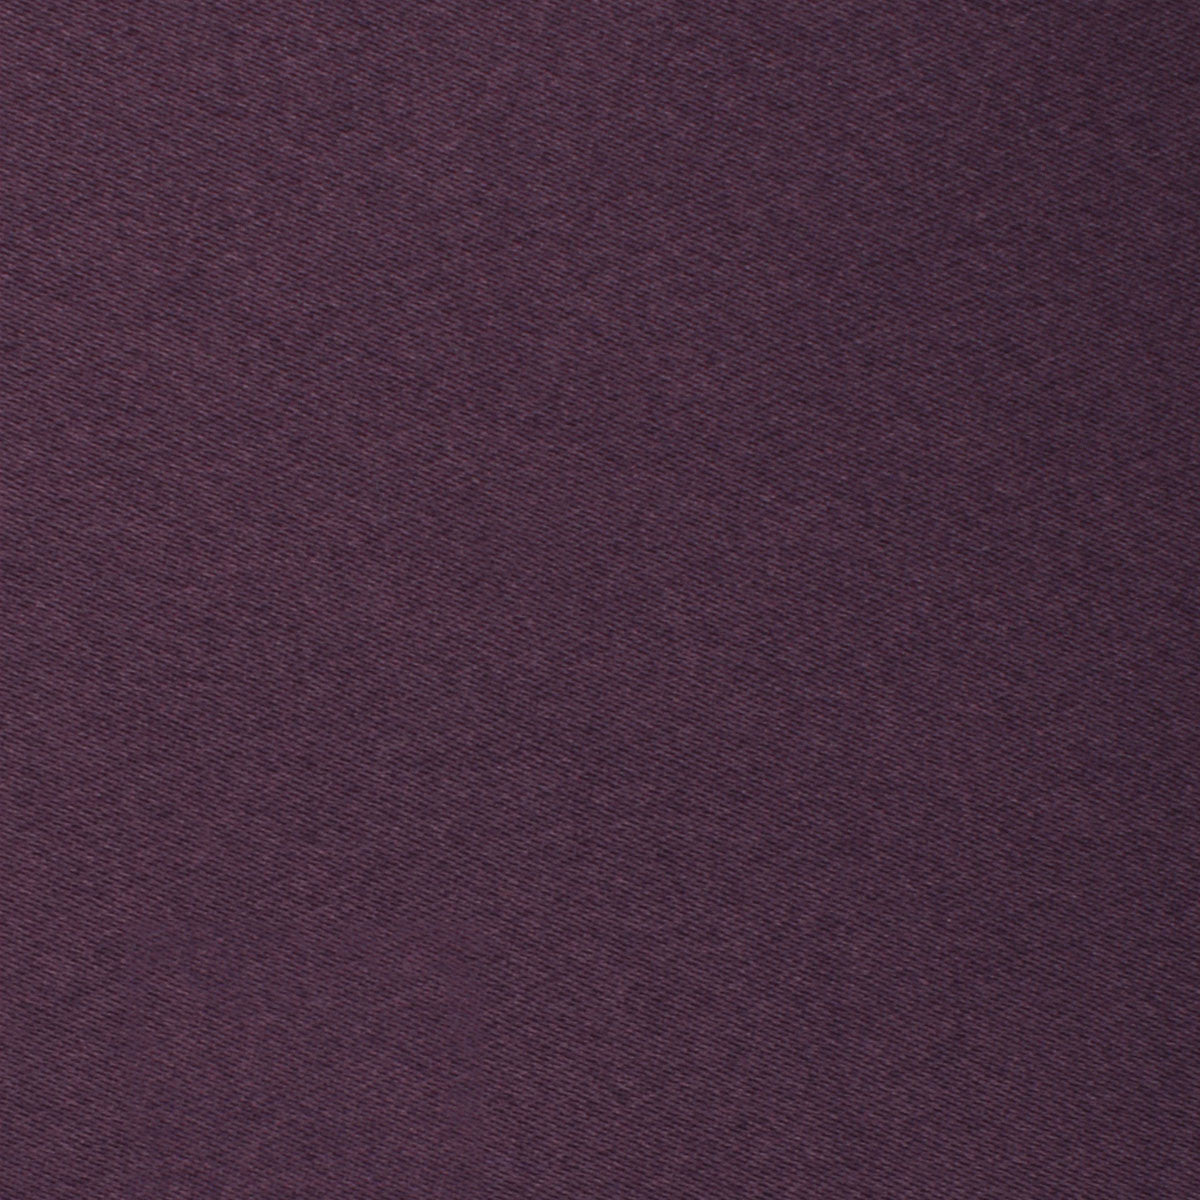 Aubergine Purple Satin Self Bow Tie Fabric